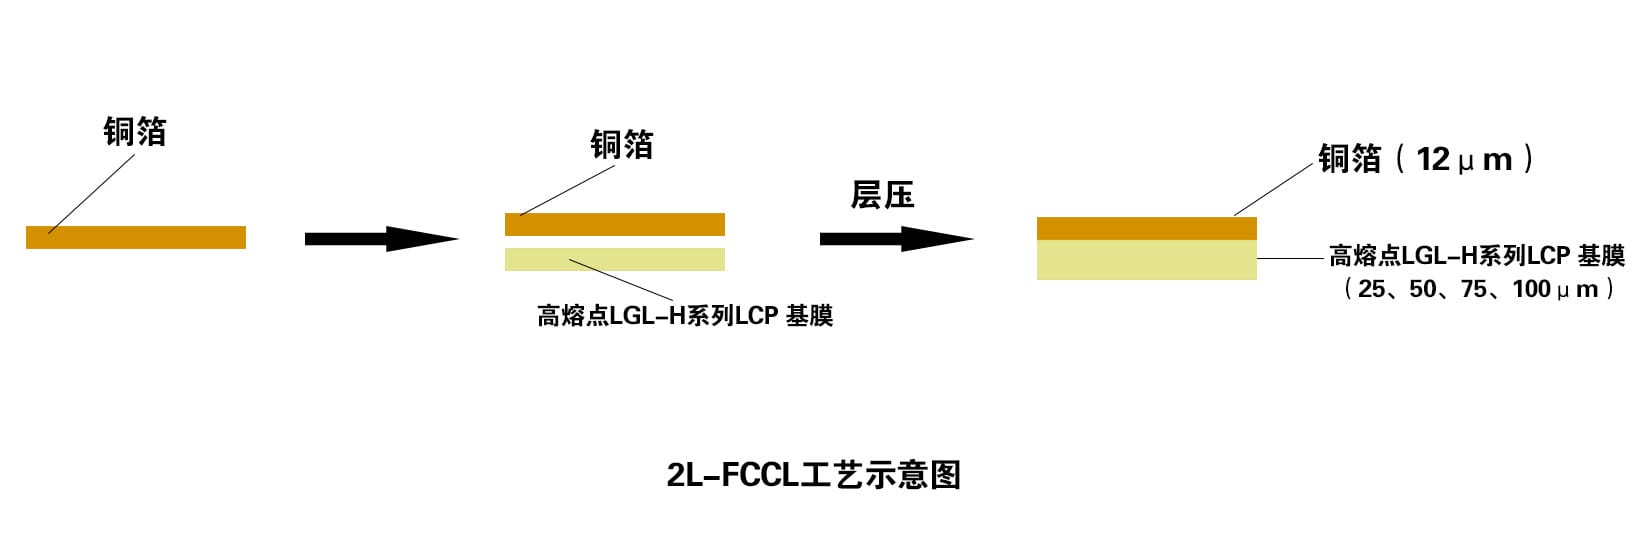 2L-FCCL工艺示意图-单面